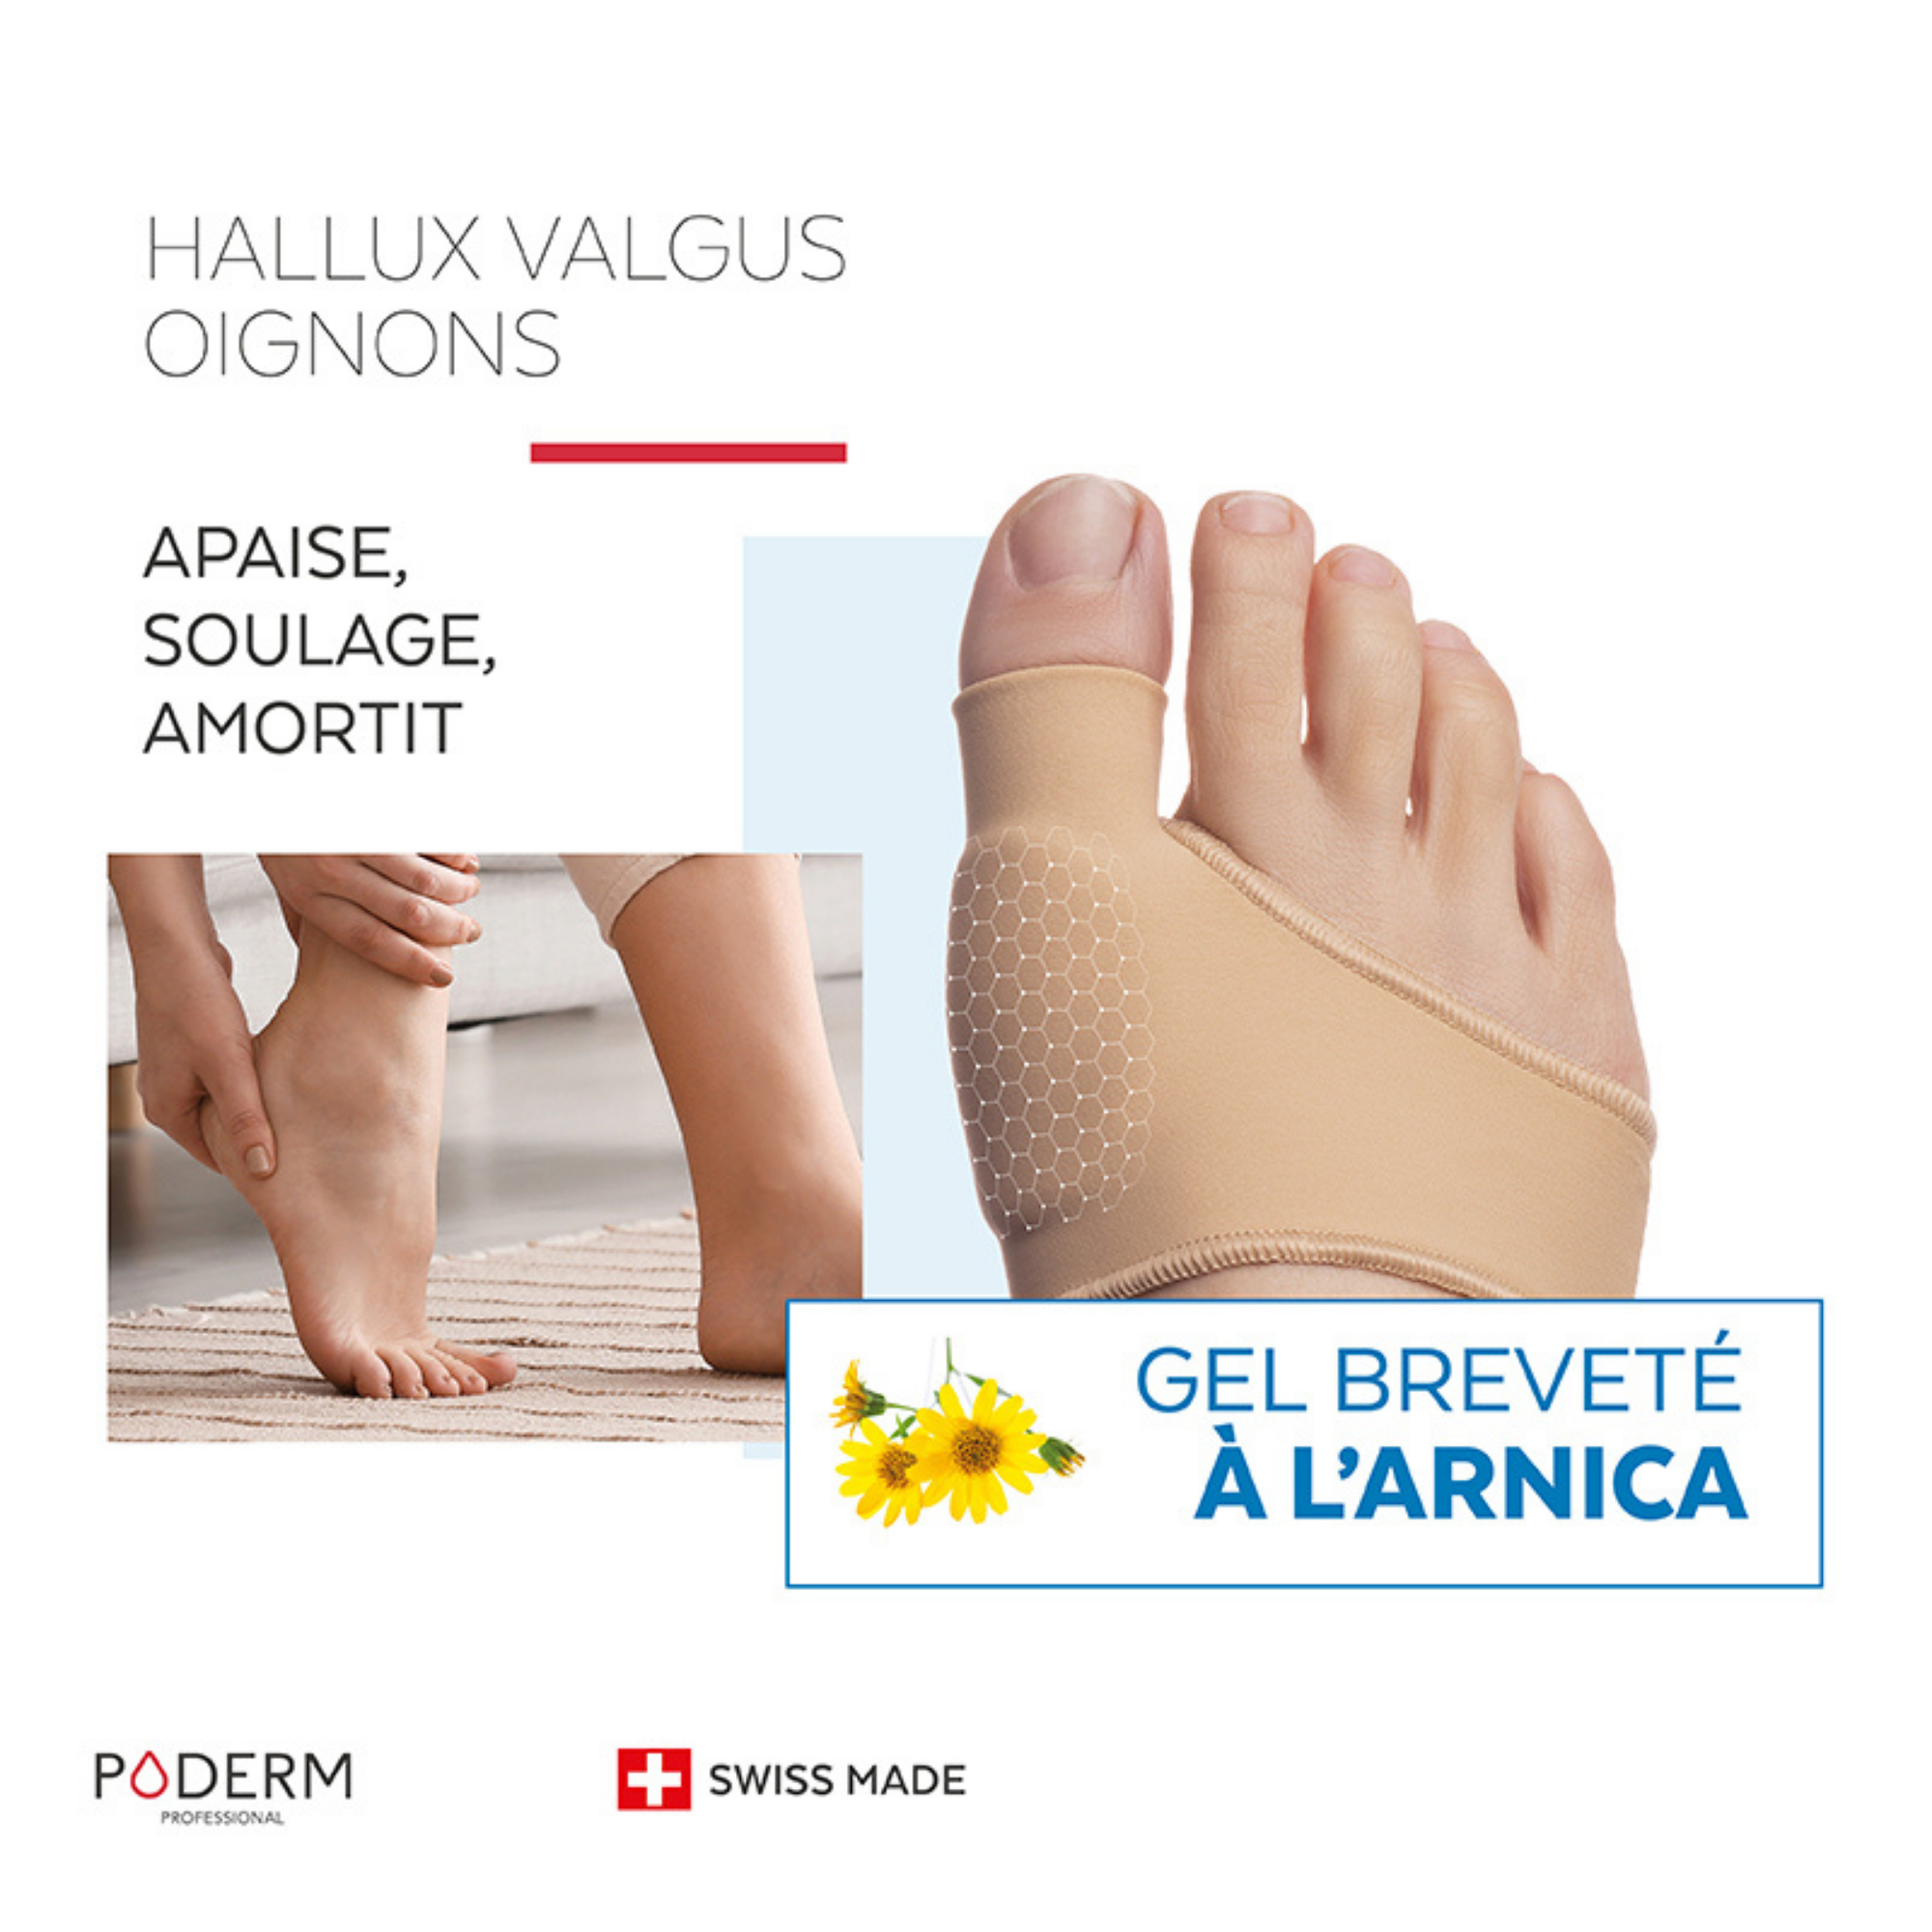 Hallux Valgus - Protection gel Arnica - Poderm Professional